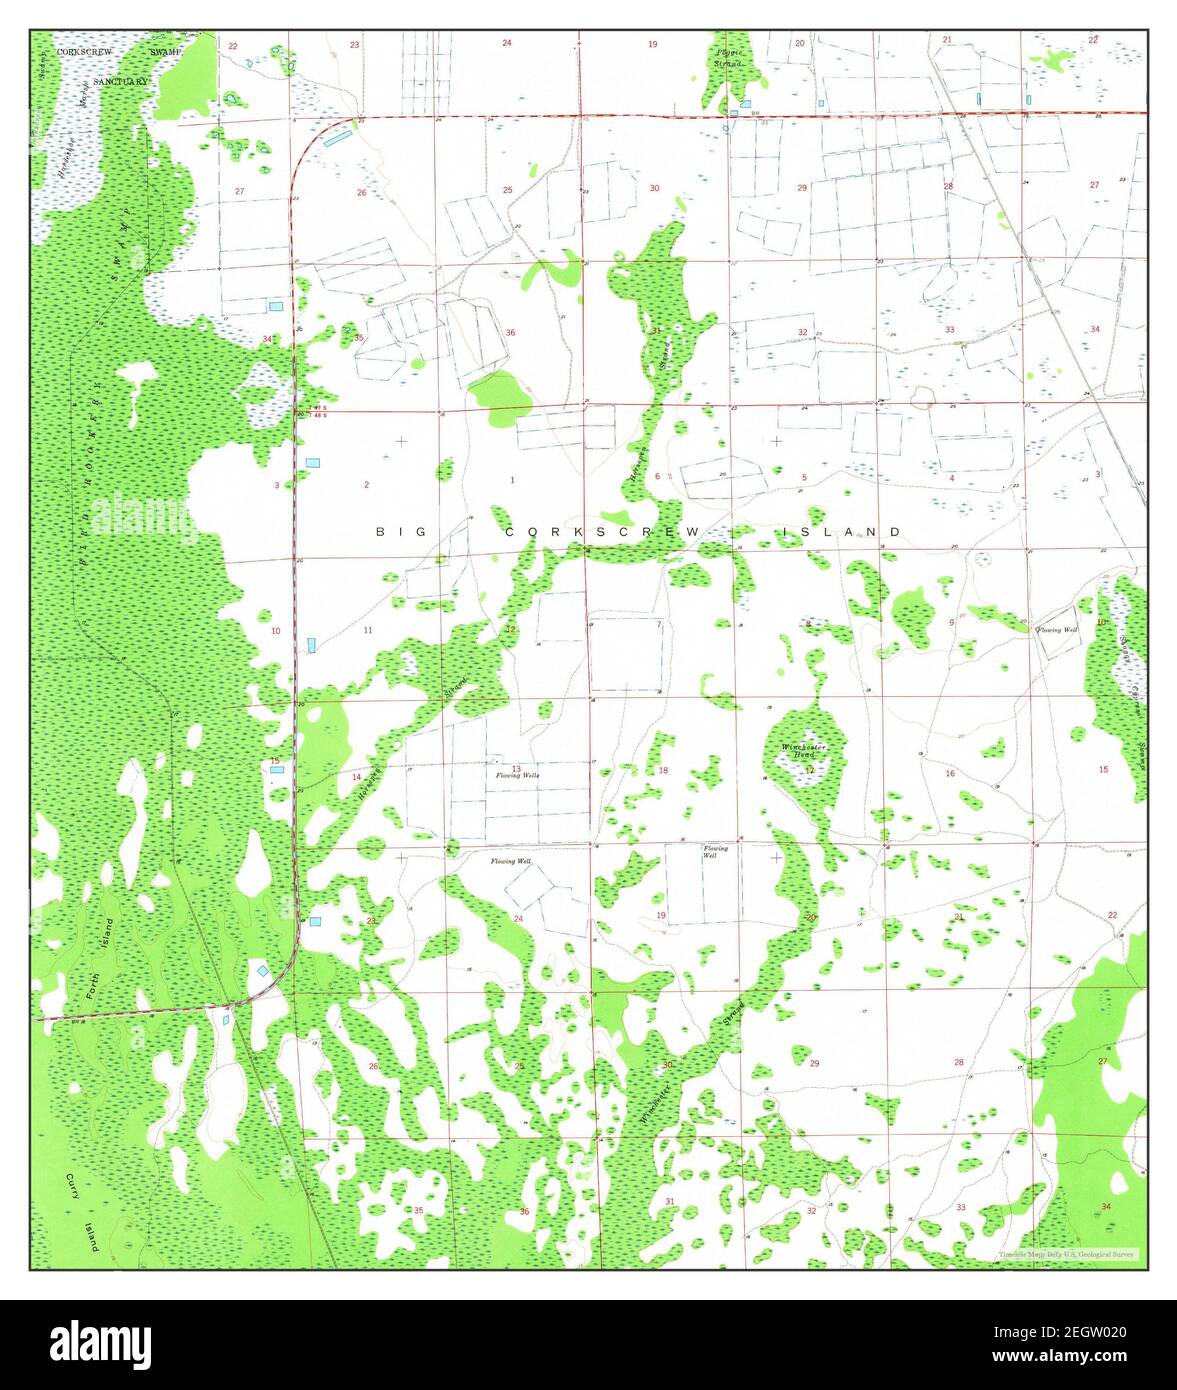 Corkscrew SE, Florida, map 1958, 1:24000, United States of America by Timeless Maps, data U.S. Geological Survey Stock Photo